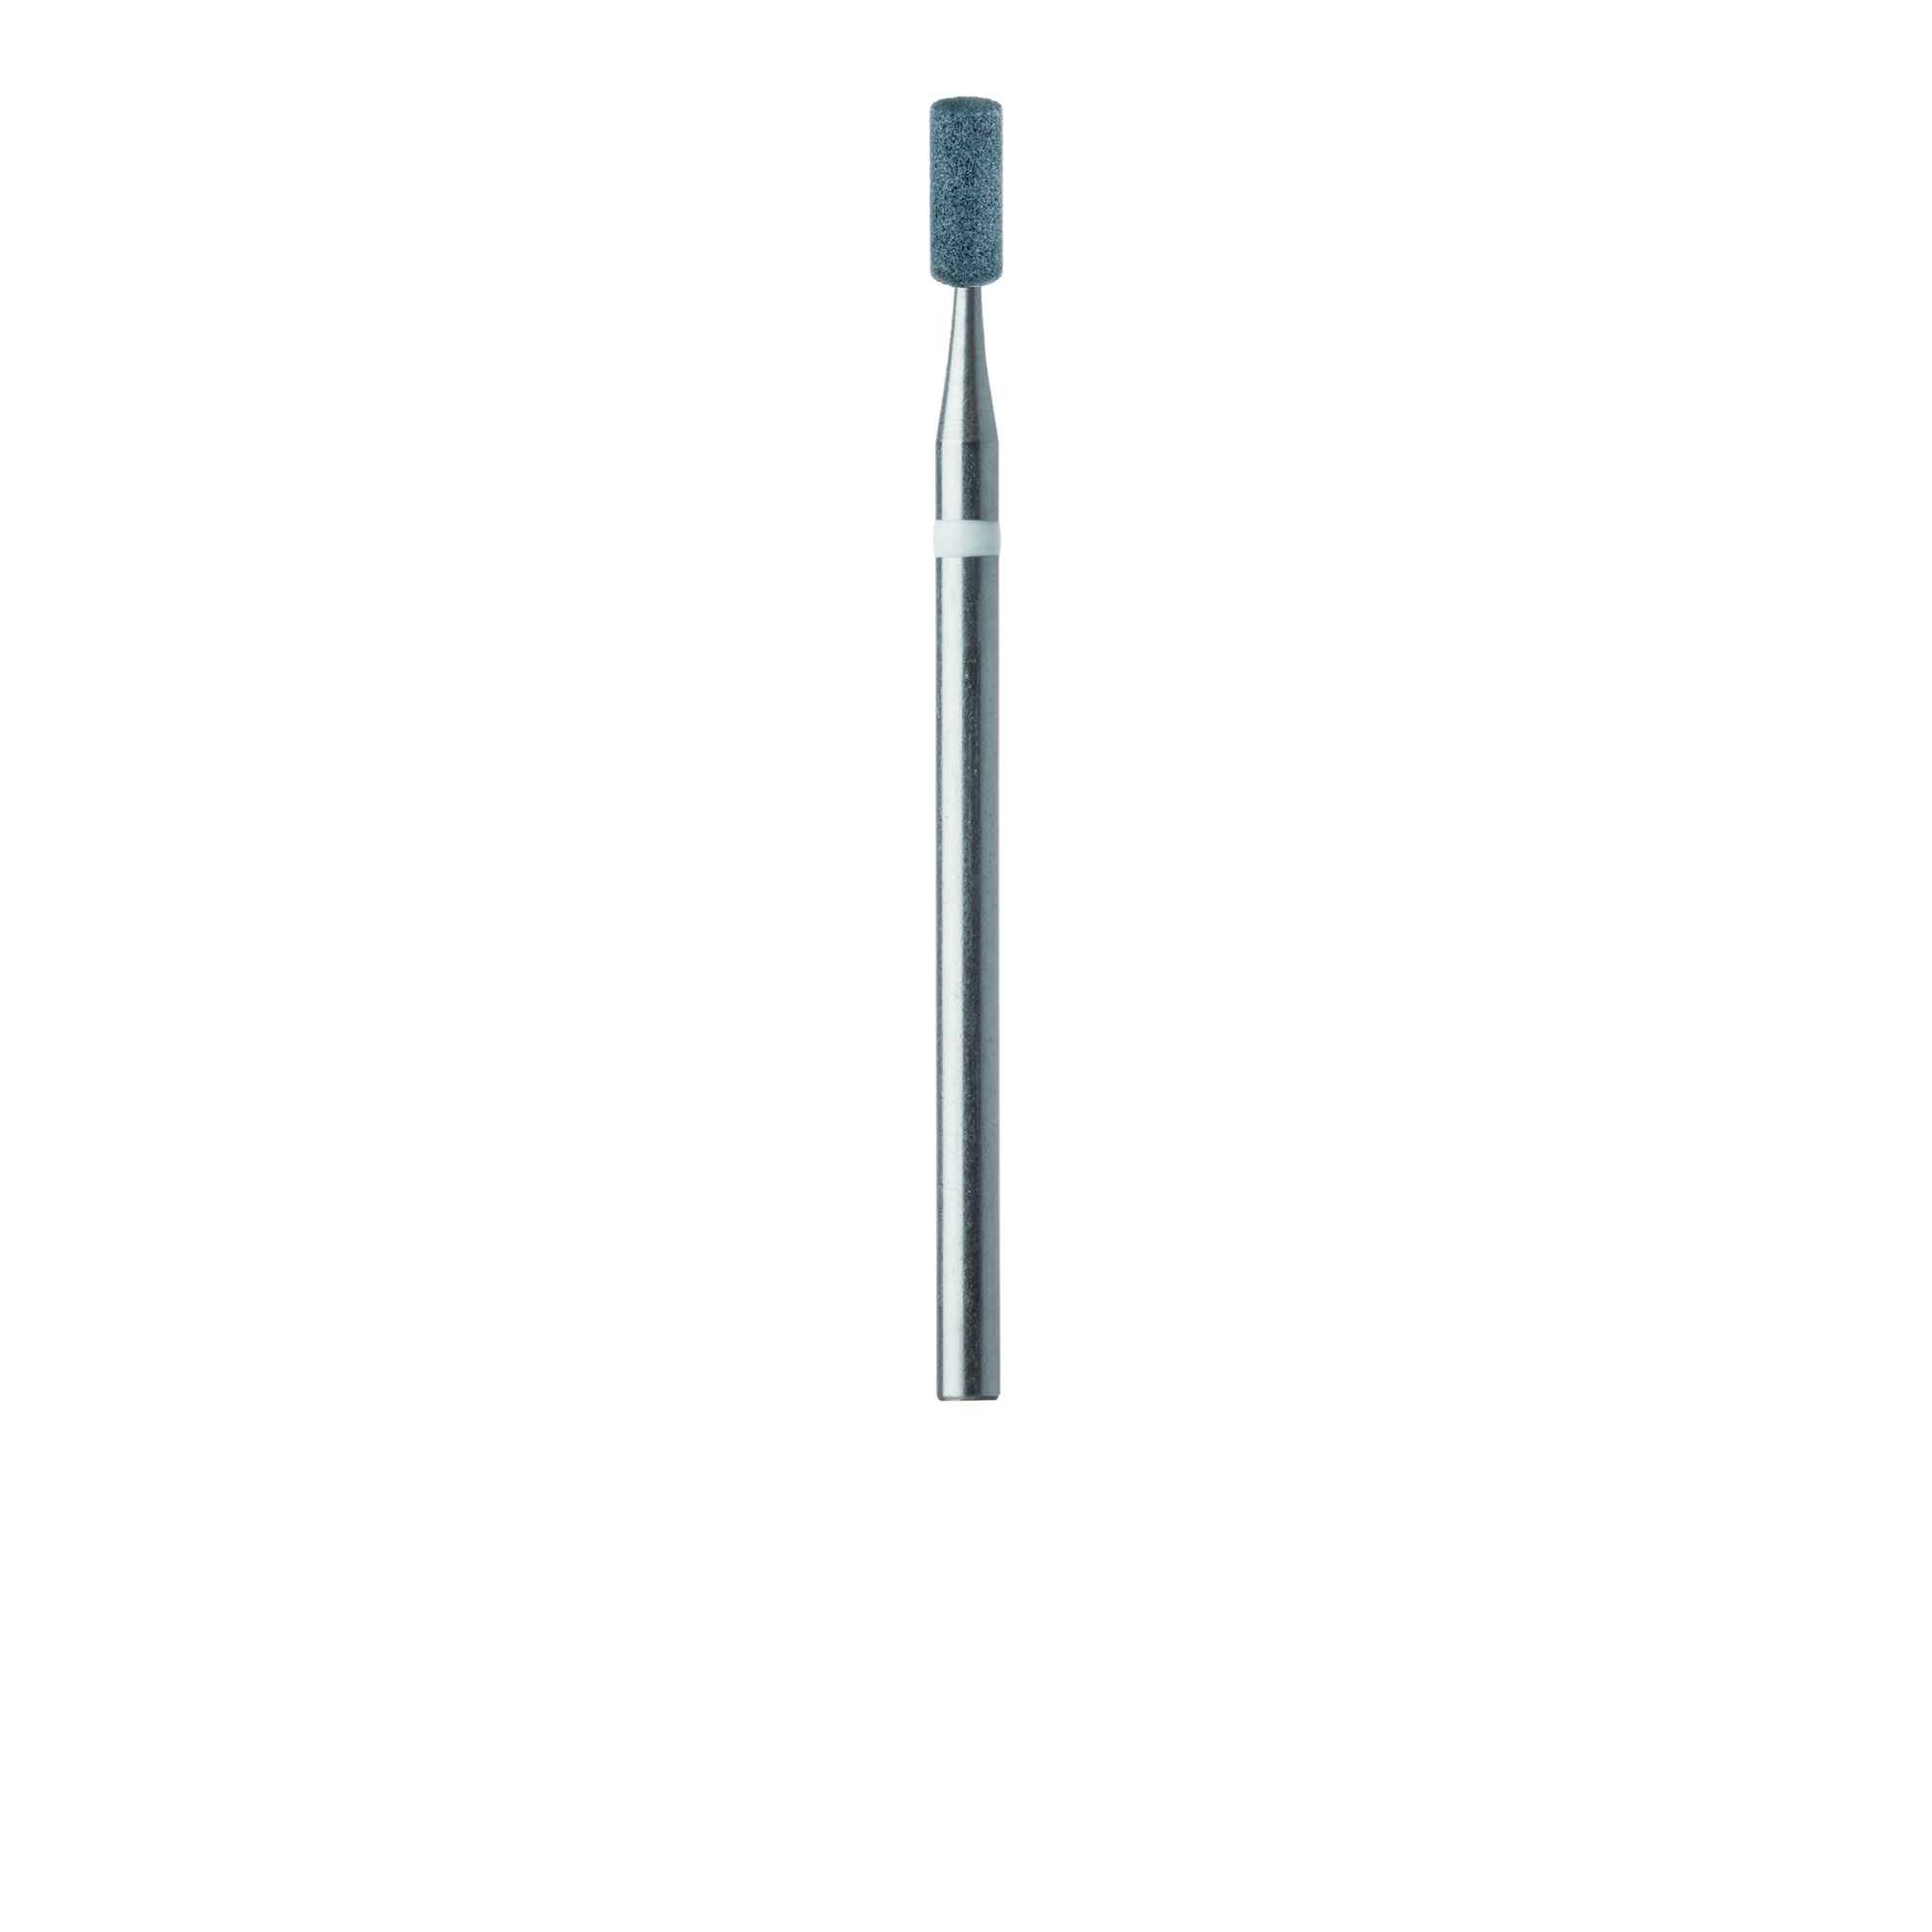 Z638-025-HP Abrasive, Grey, for Zr2, Short Barrel, 4mm Ø, Fine, HP